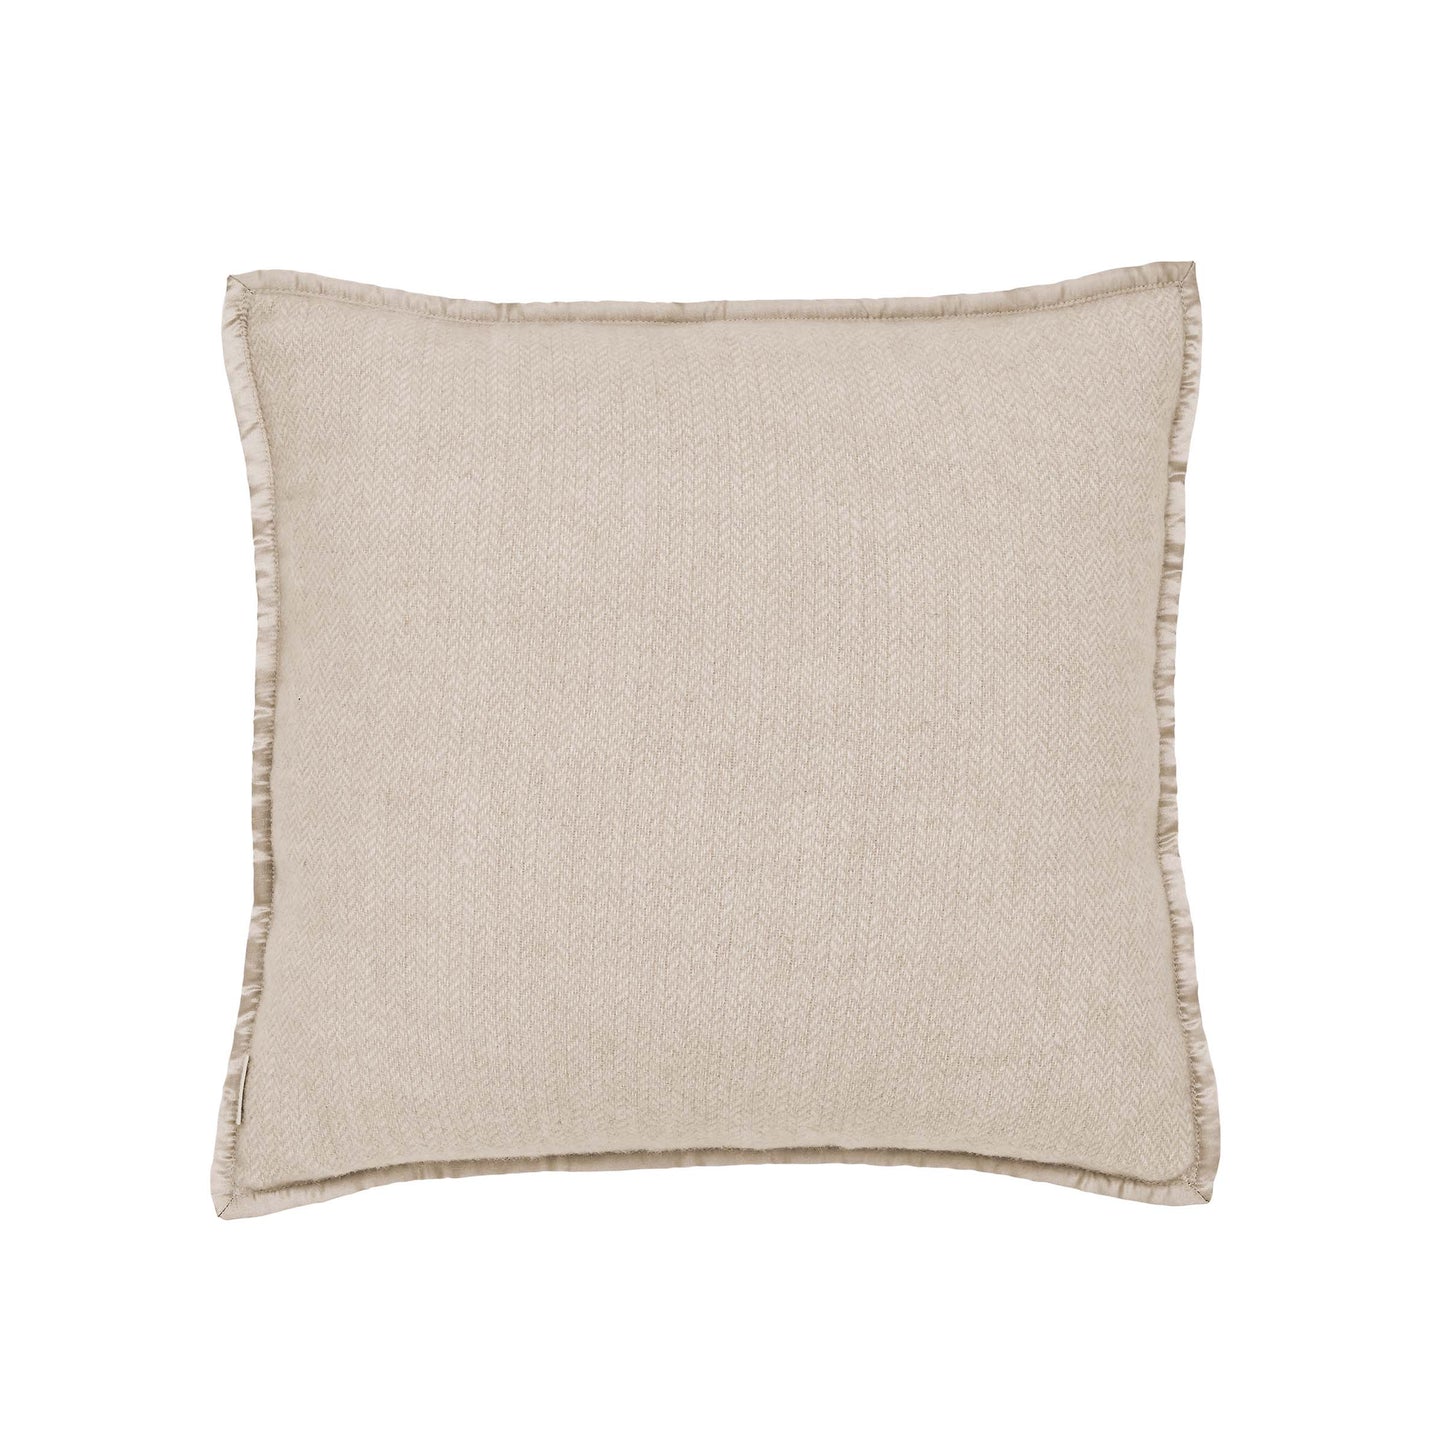 Lewin Wool Herringbone Woven Cushion 45cm x 45cm, Linen